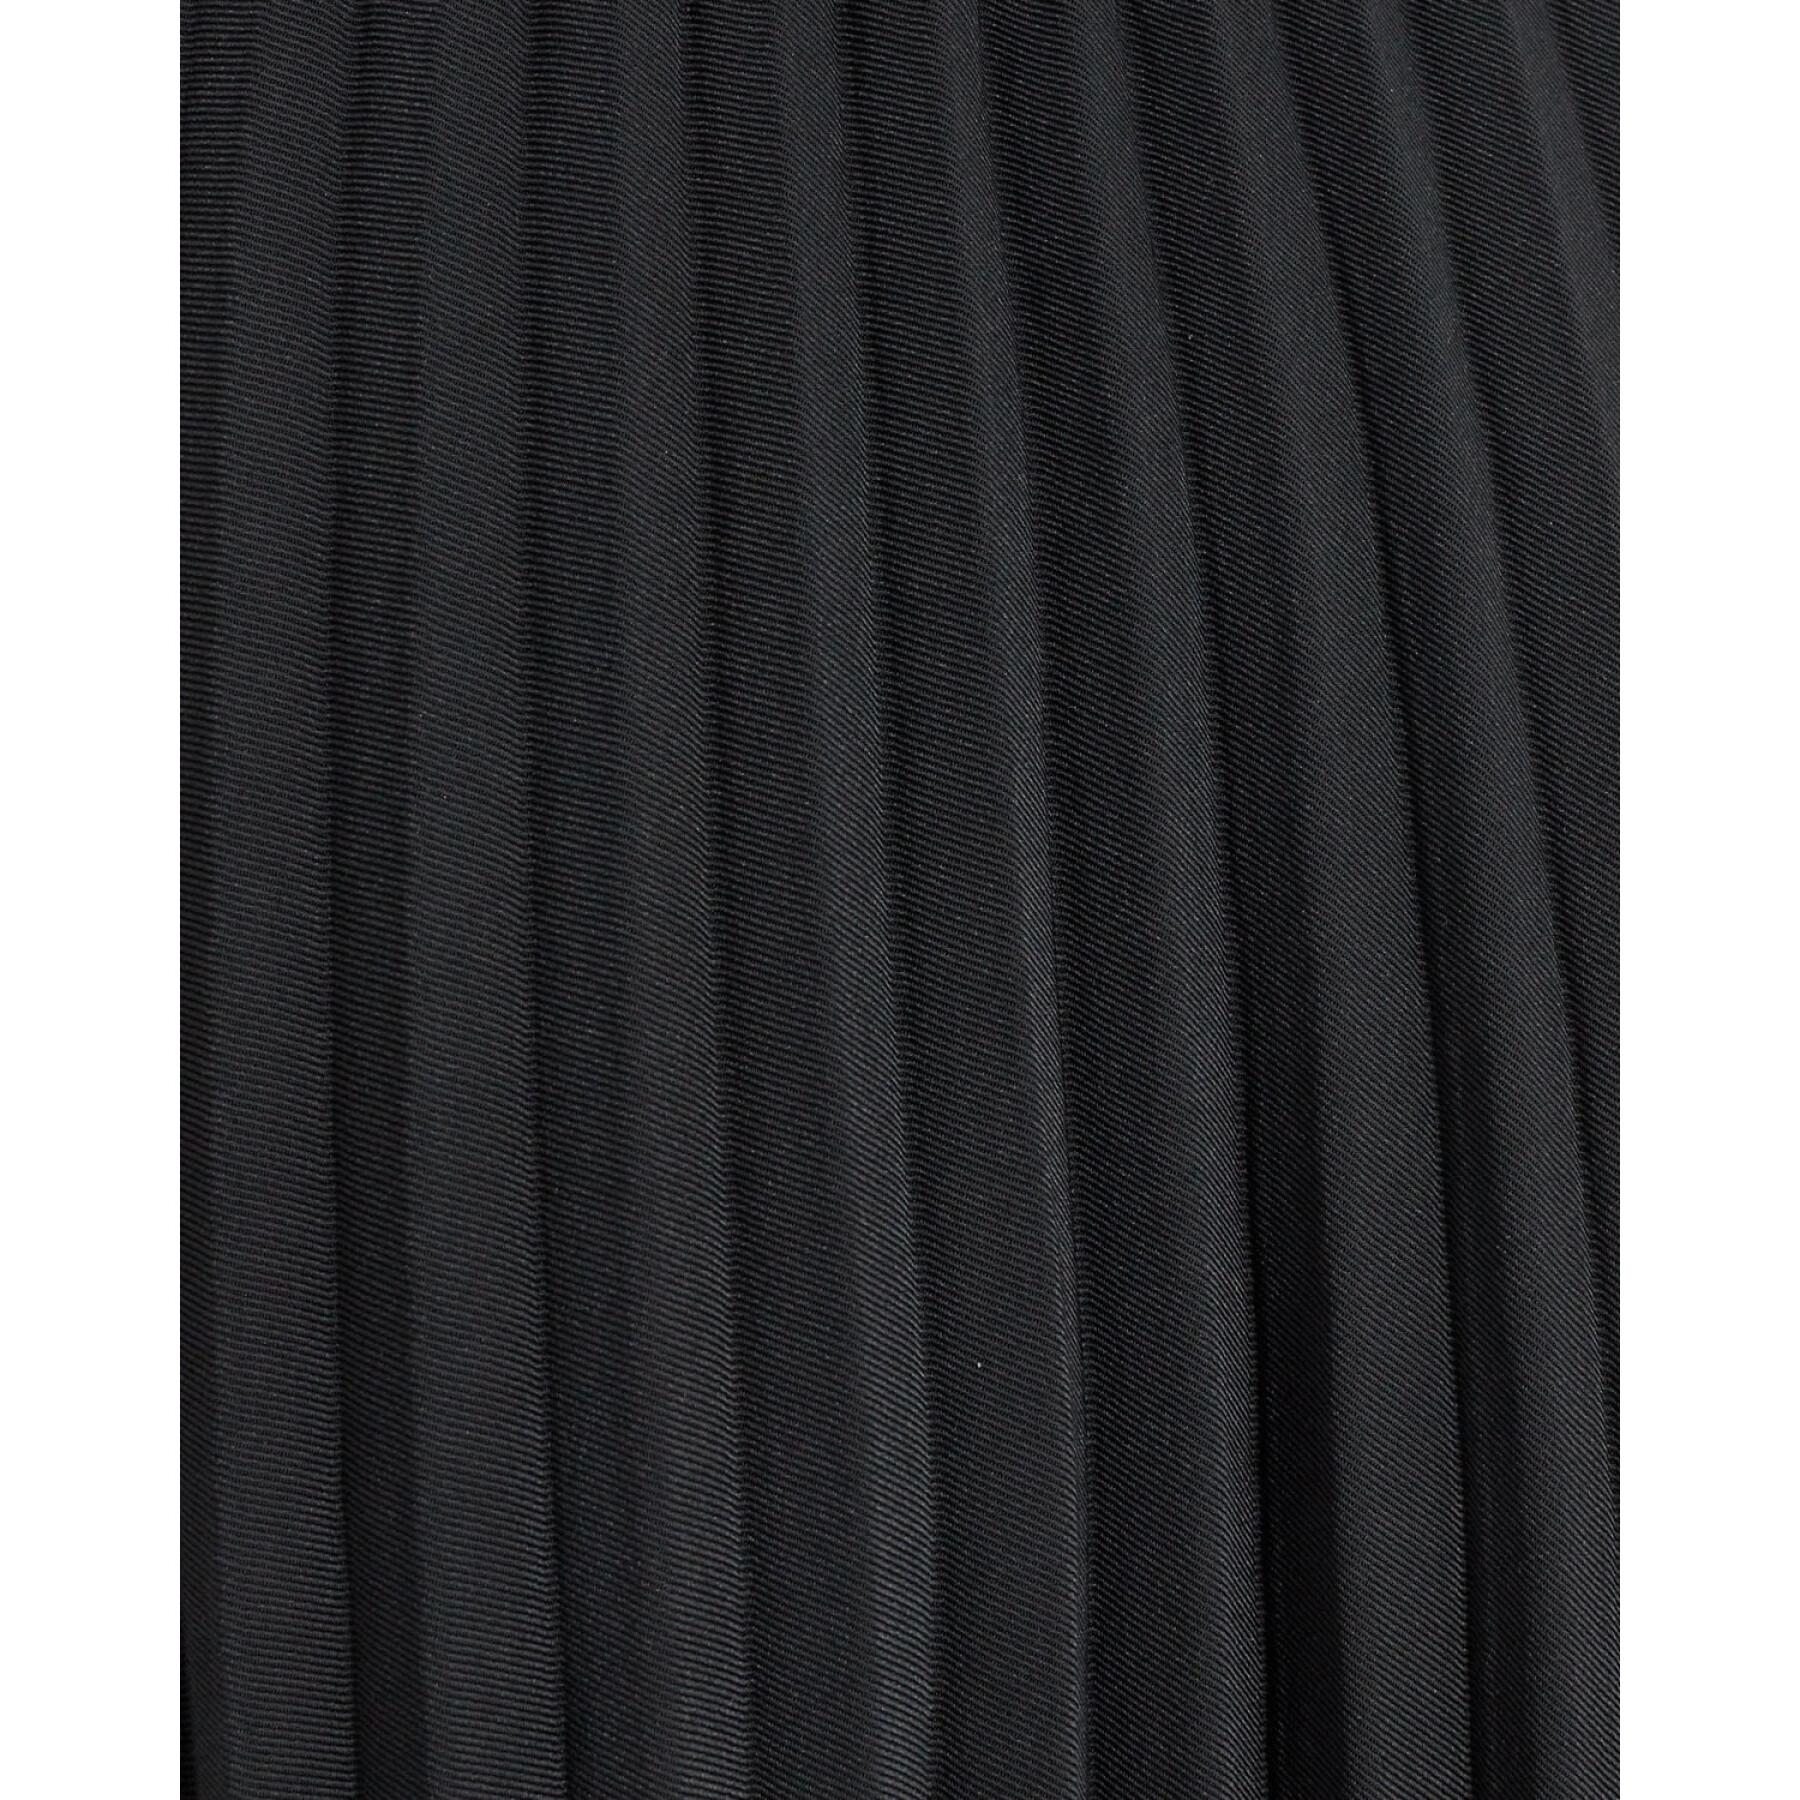 Długa spódnica damska Minimum Filina 9285